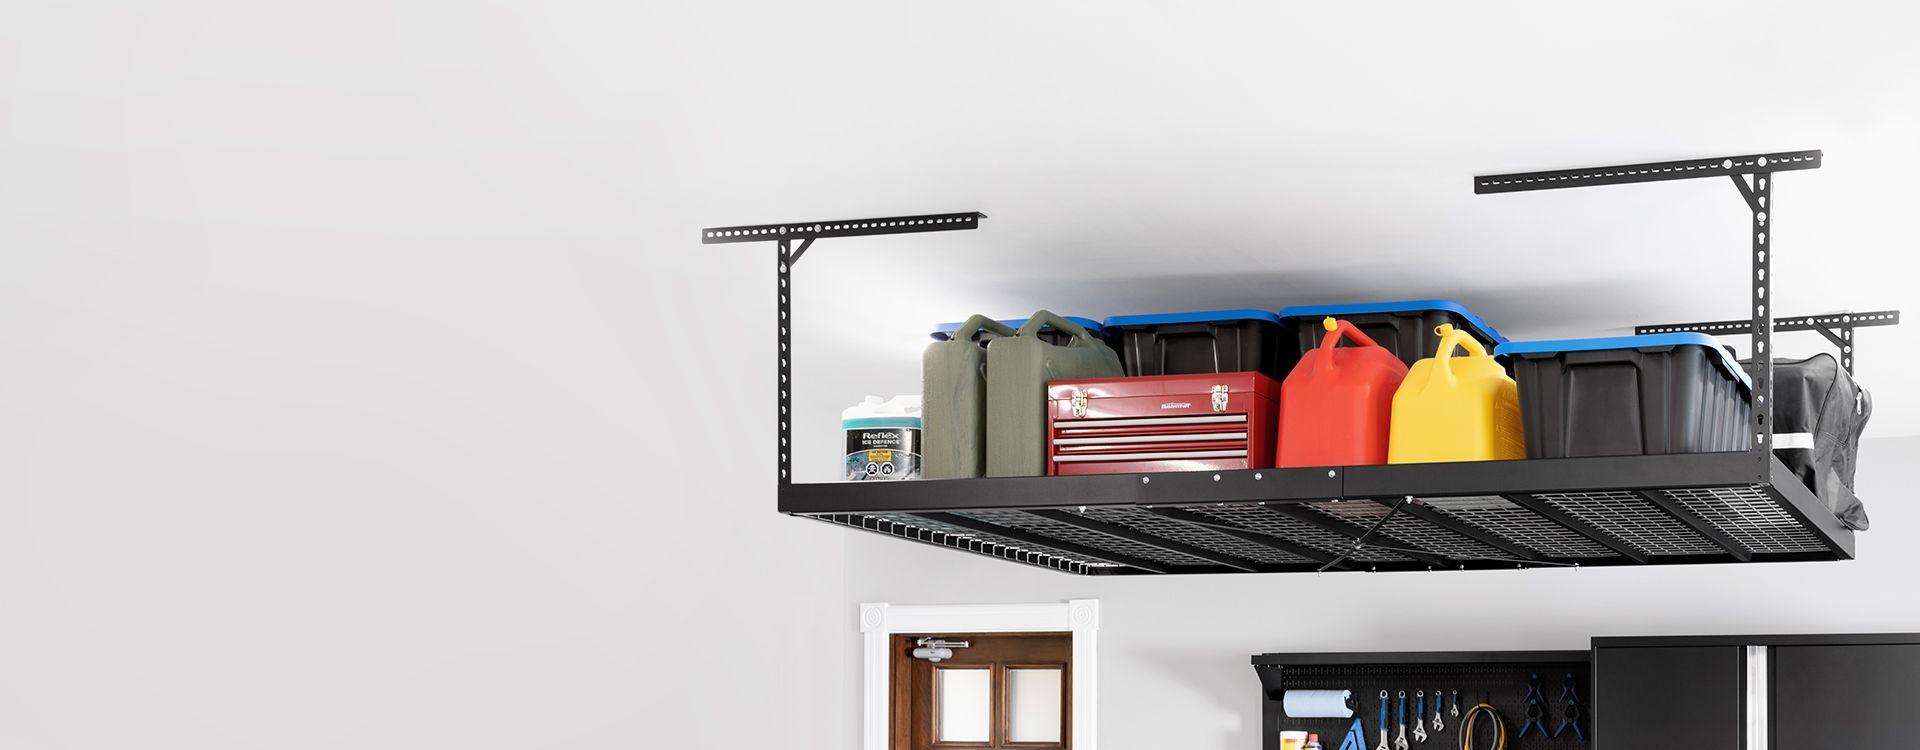 our ultimate overhead storage racks